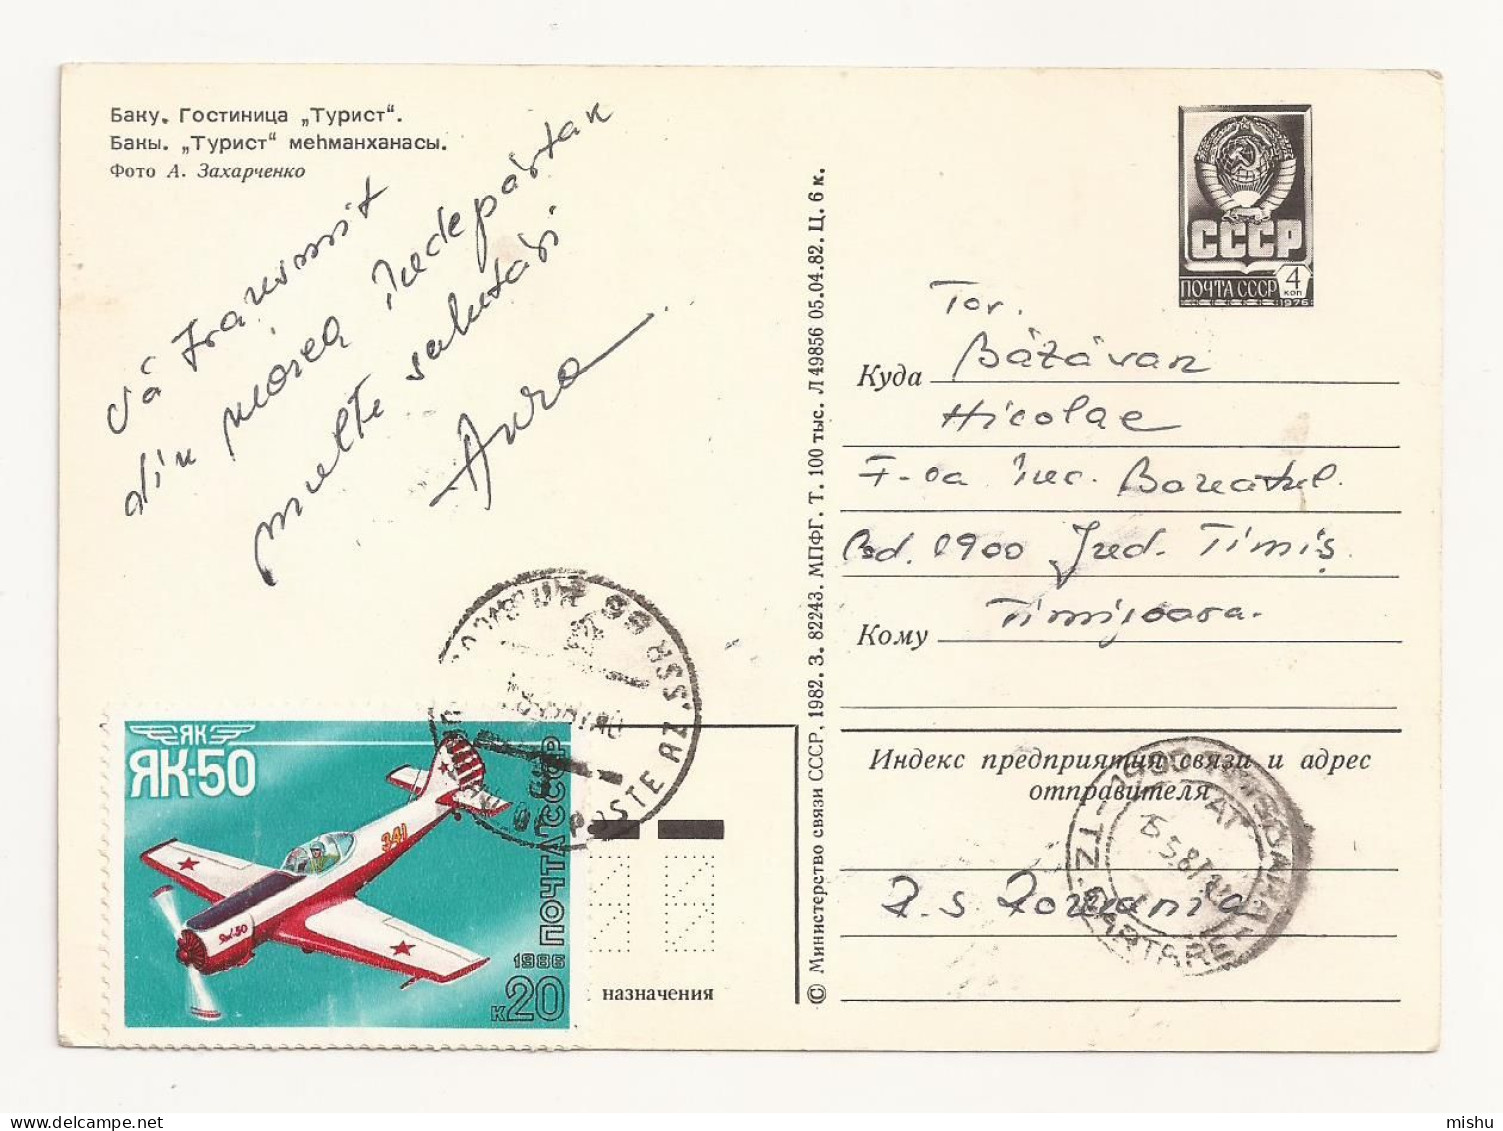 CP5 - Postcard - AZERBAIJAN - Turist” Hotel Baku, Azerbaijan, Circulated 1982 - Azerbaiyan